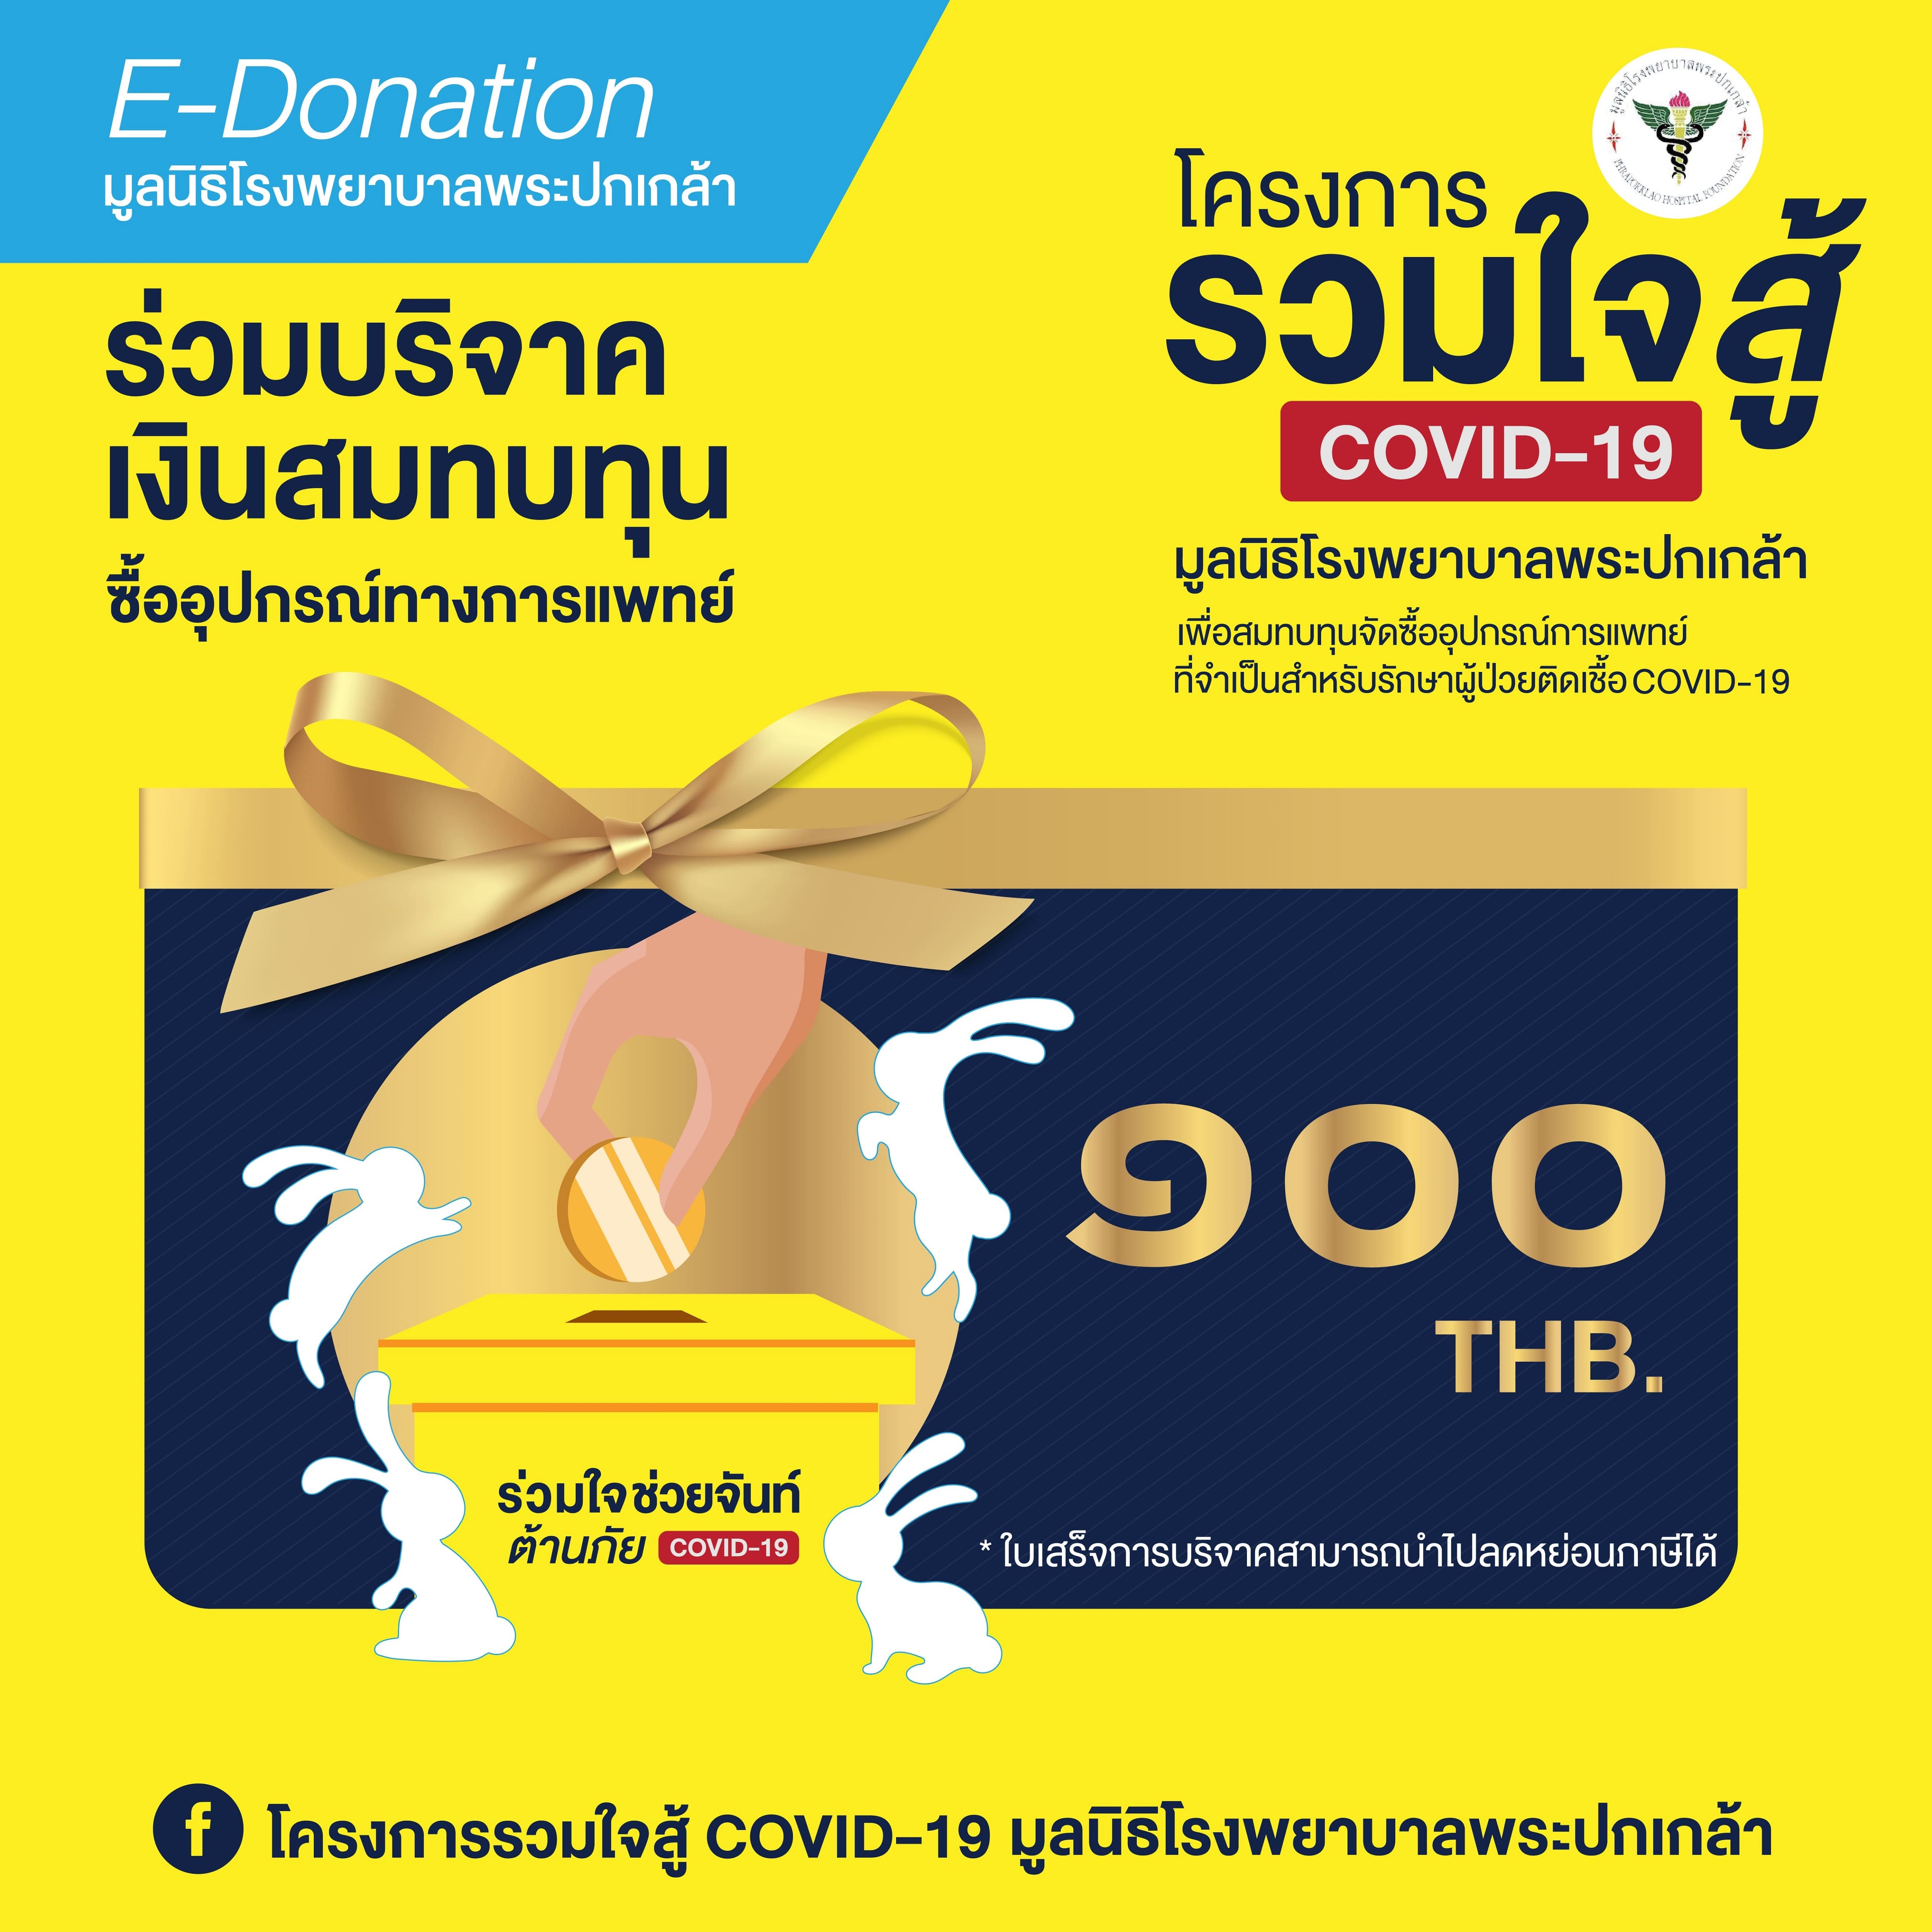 [E-Donation] โครงการป้องกันและช่วยเหลือสถานการณ์แพร่ระบาดของโควิด-19 (Covid-19) มูลนิธิโรงพยาบาลพระปกเกล้า จำนวน 100 บาท